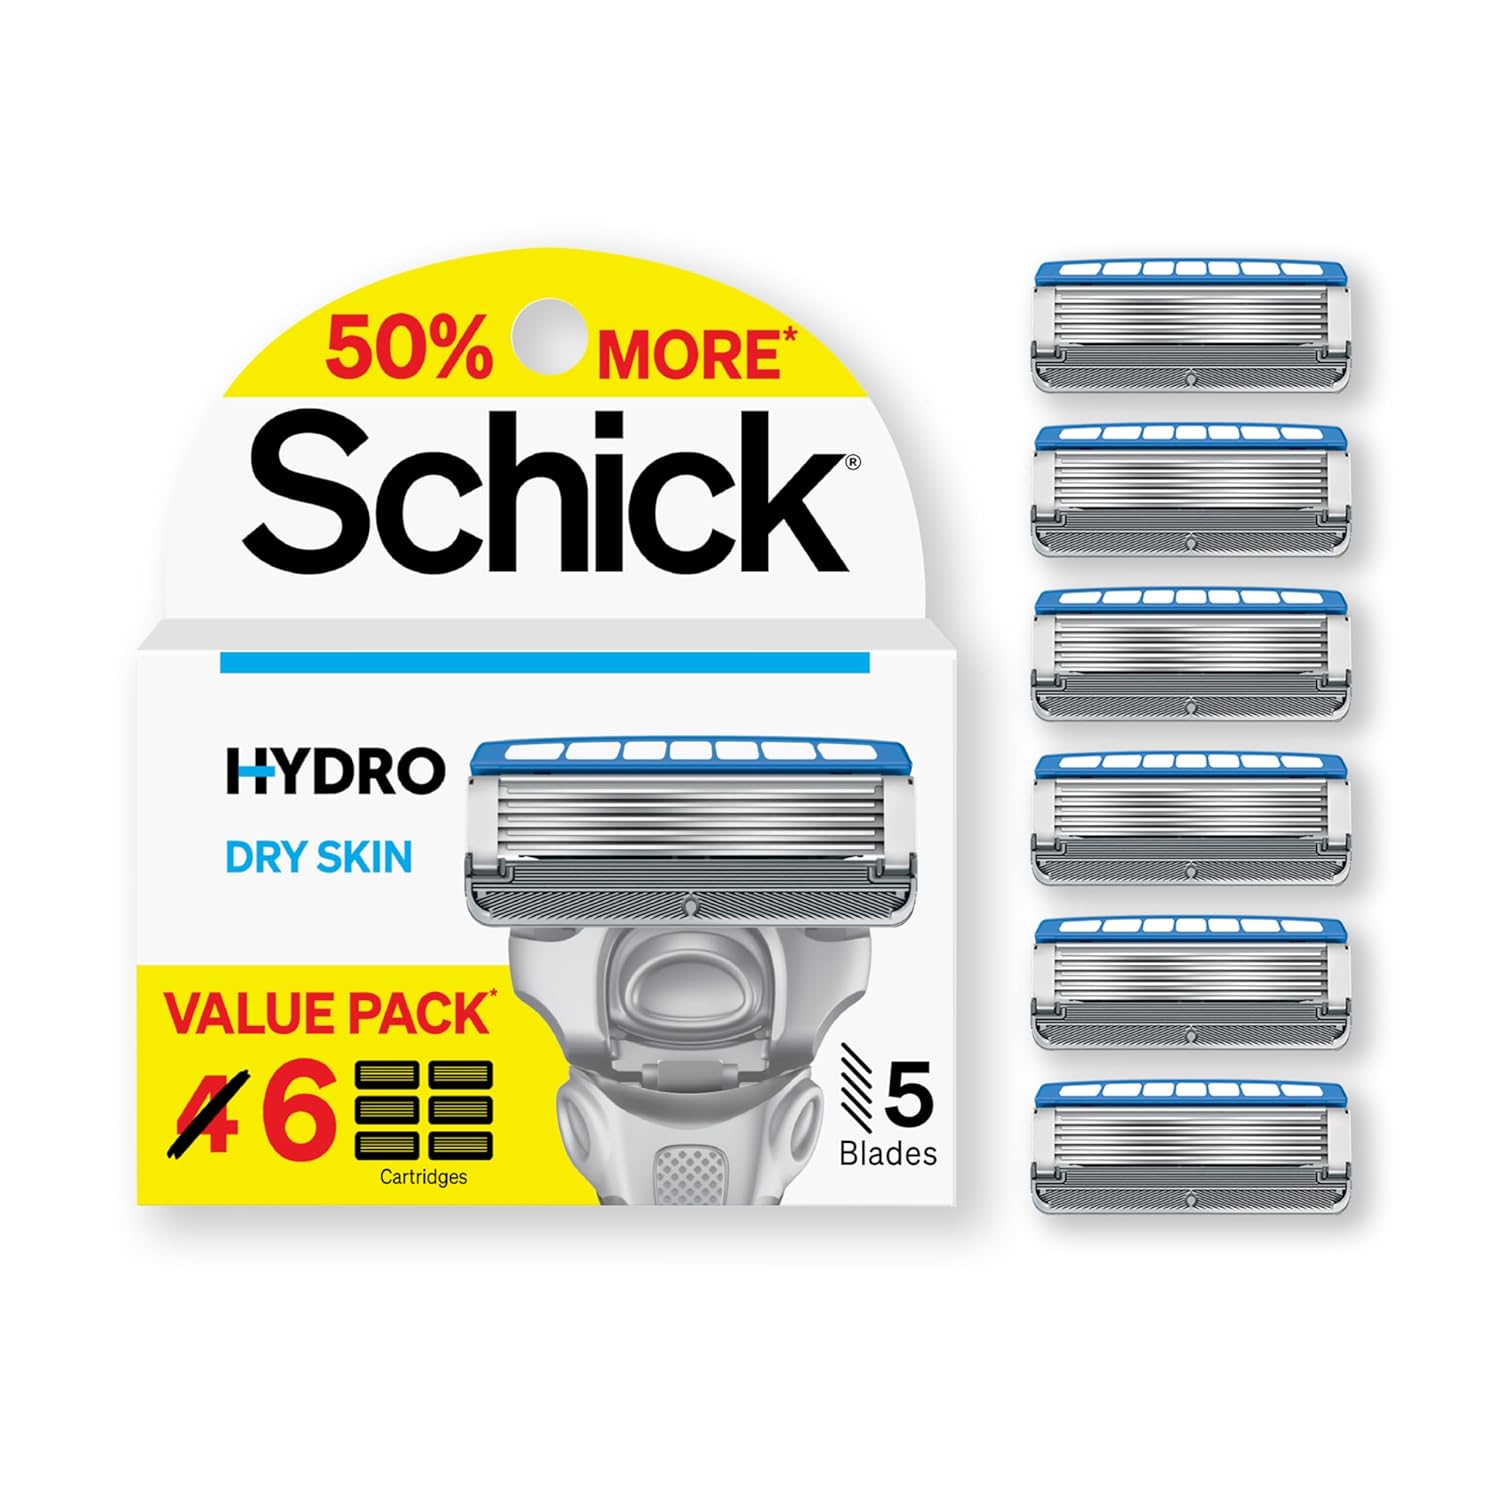 Schick Hydro Dry Skin Razor Refills, 6ct | Razor Blades Refills, Razor Blades for Men, Shaving Blades for Men, Hydro Razor Blades Refill, 5 Blade Razor Men, 6 Refills